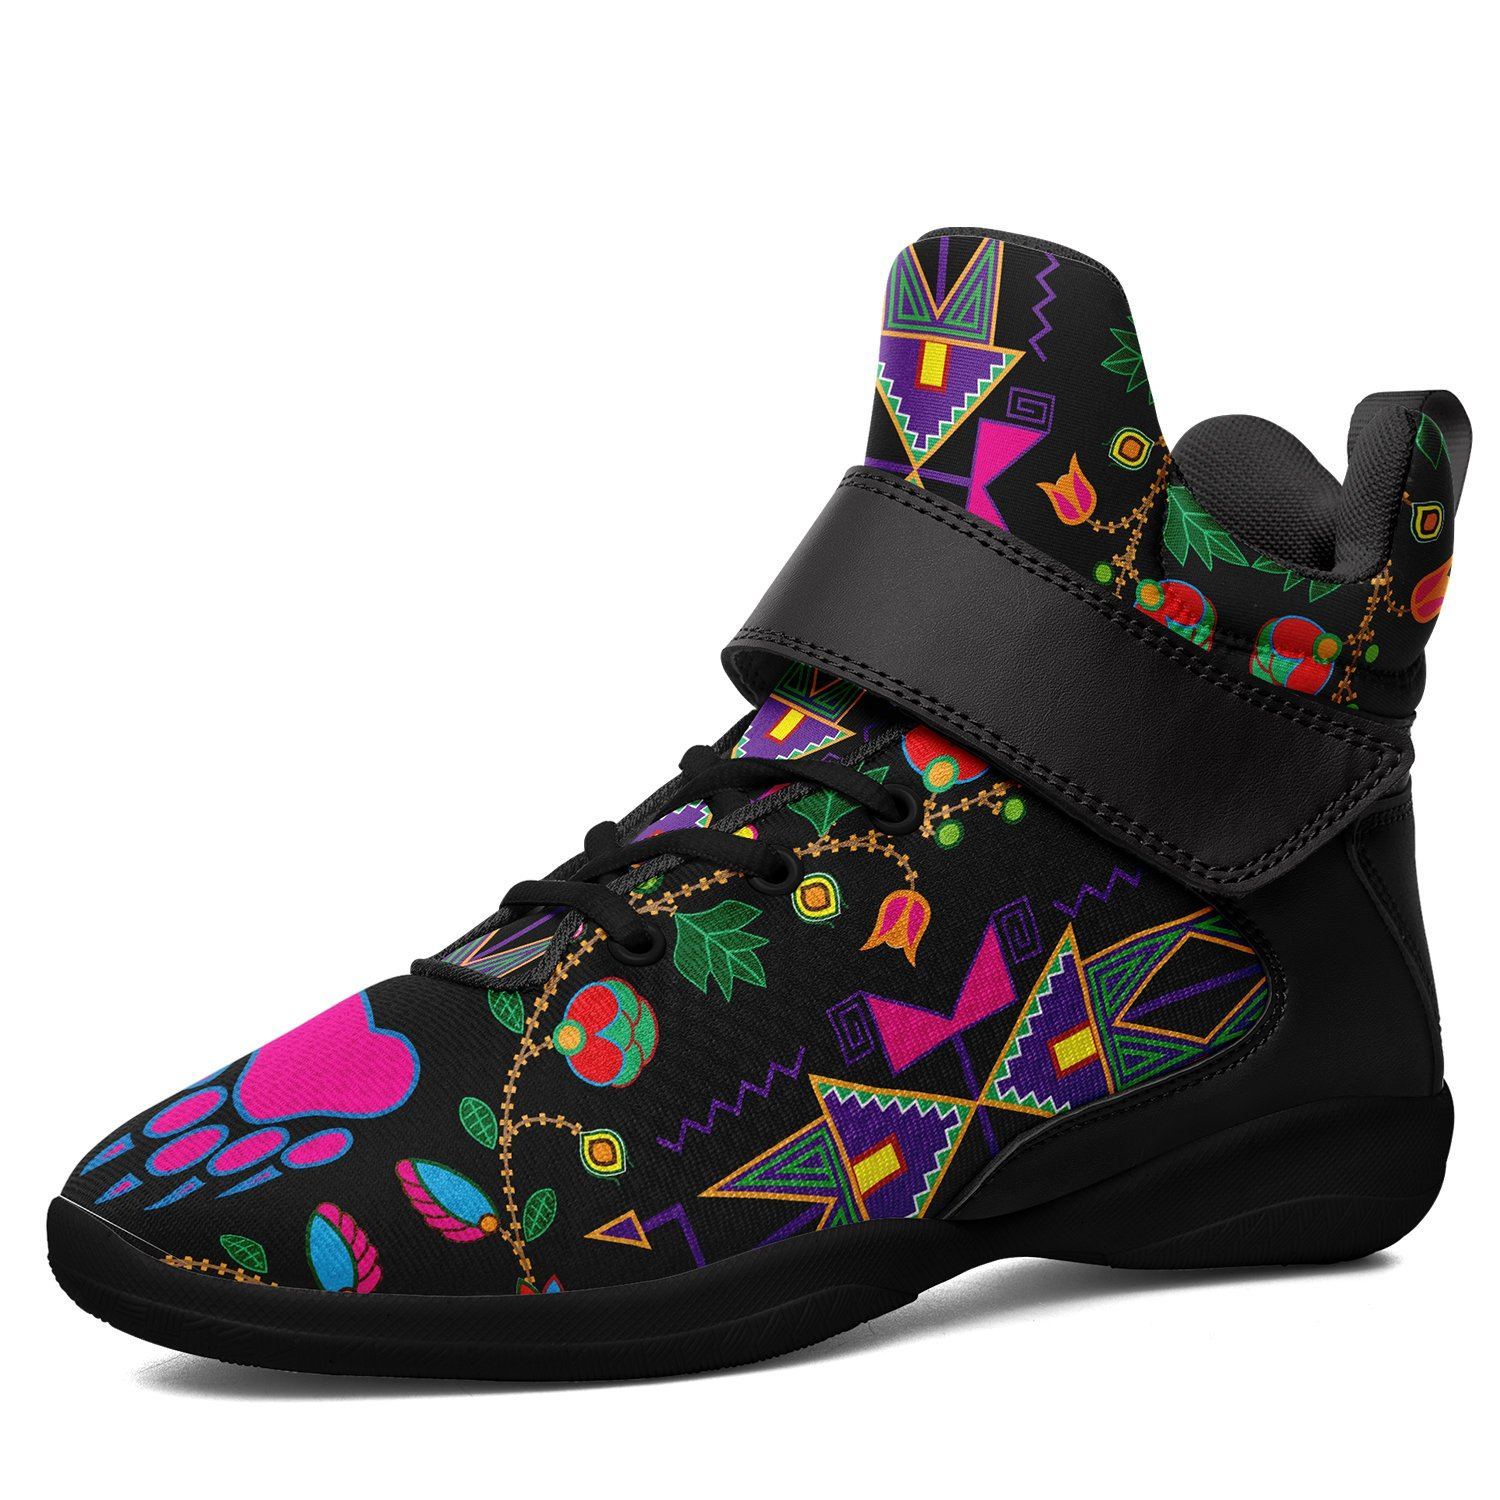 Geometric Floral Fall Black Ipottaa Basketball / Sport High Top Shoes - Black Sole 49 Dzine US Women 8.5 / US Men 7 / EUR 40 Black Sole with Black Strap 